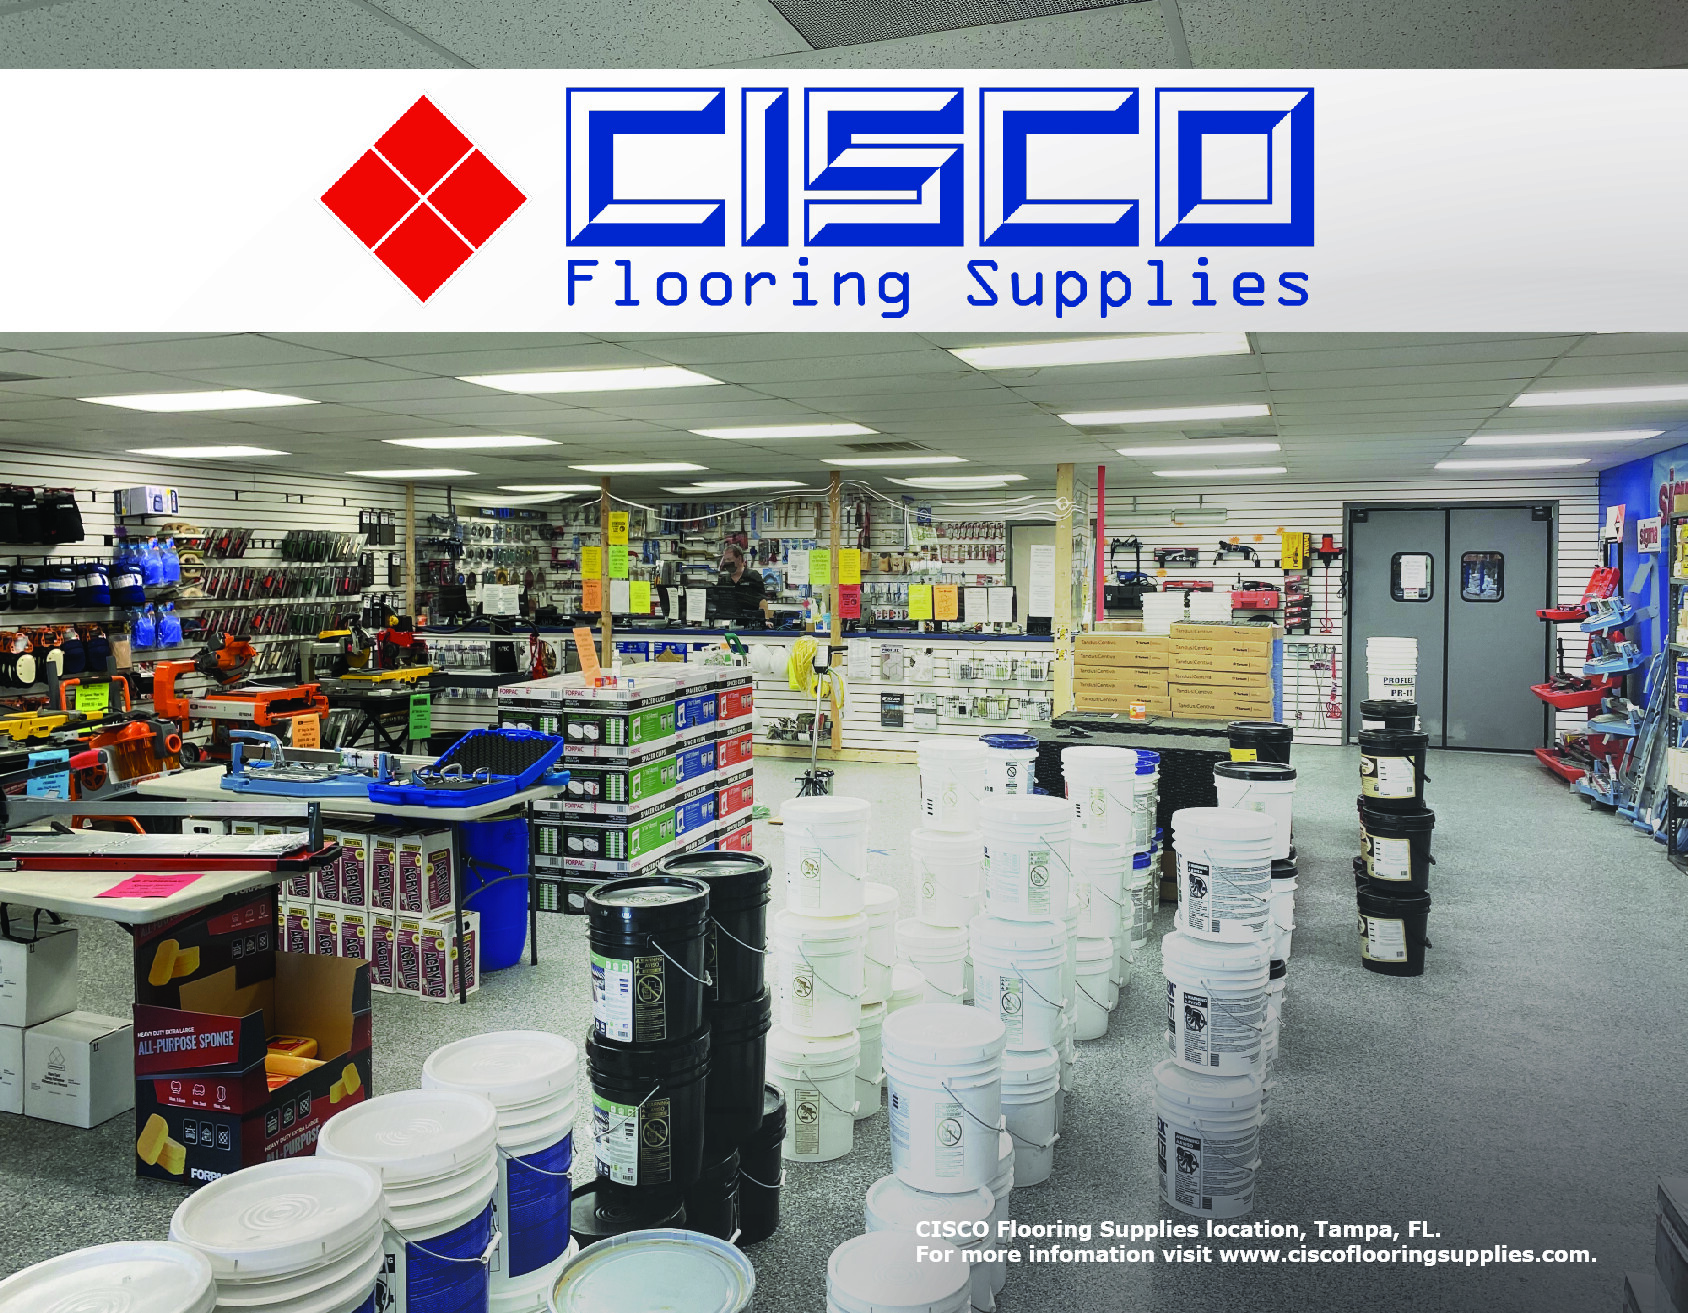 Cisco Flooring Supplies Linkedin